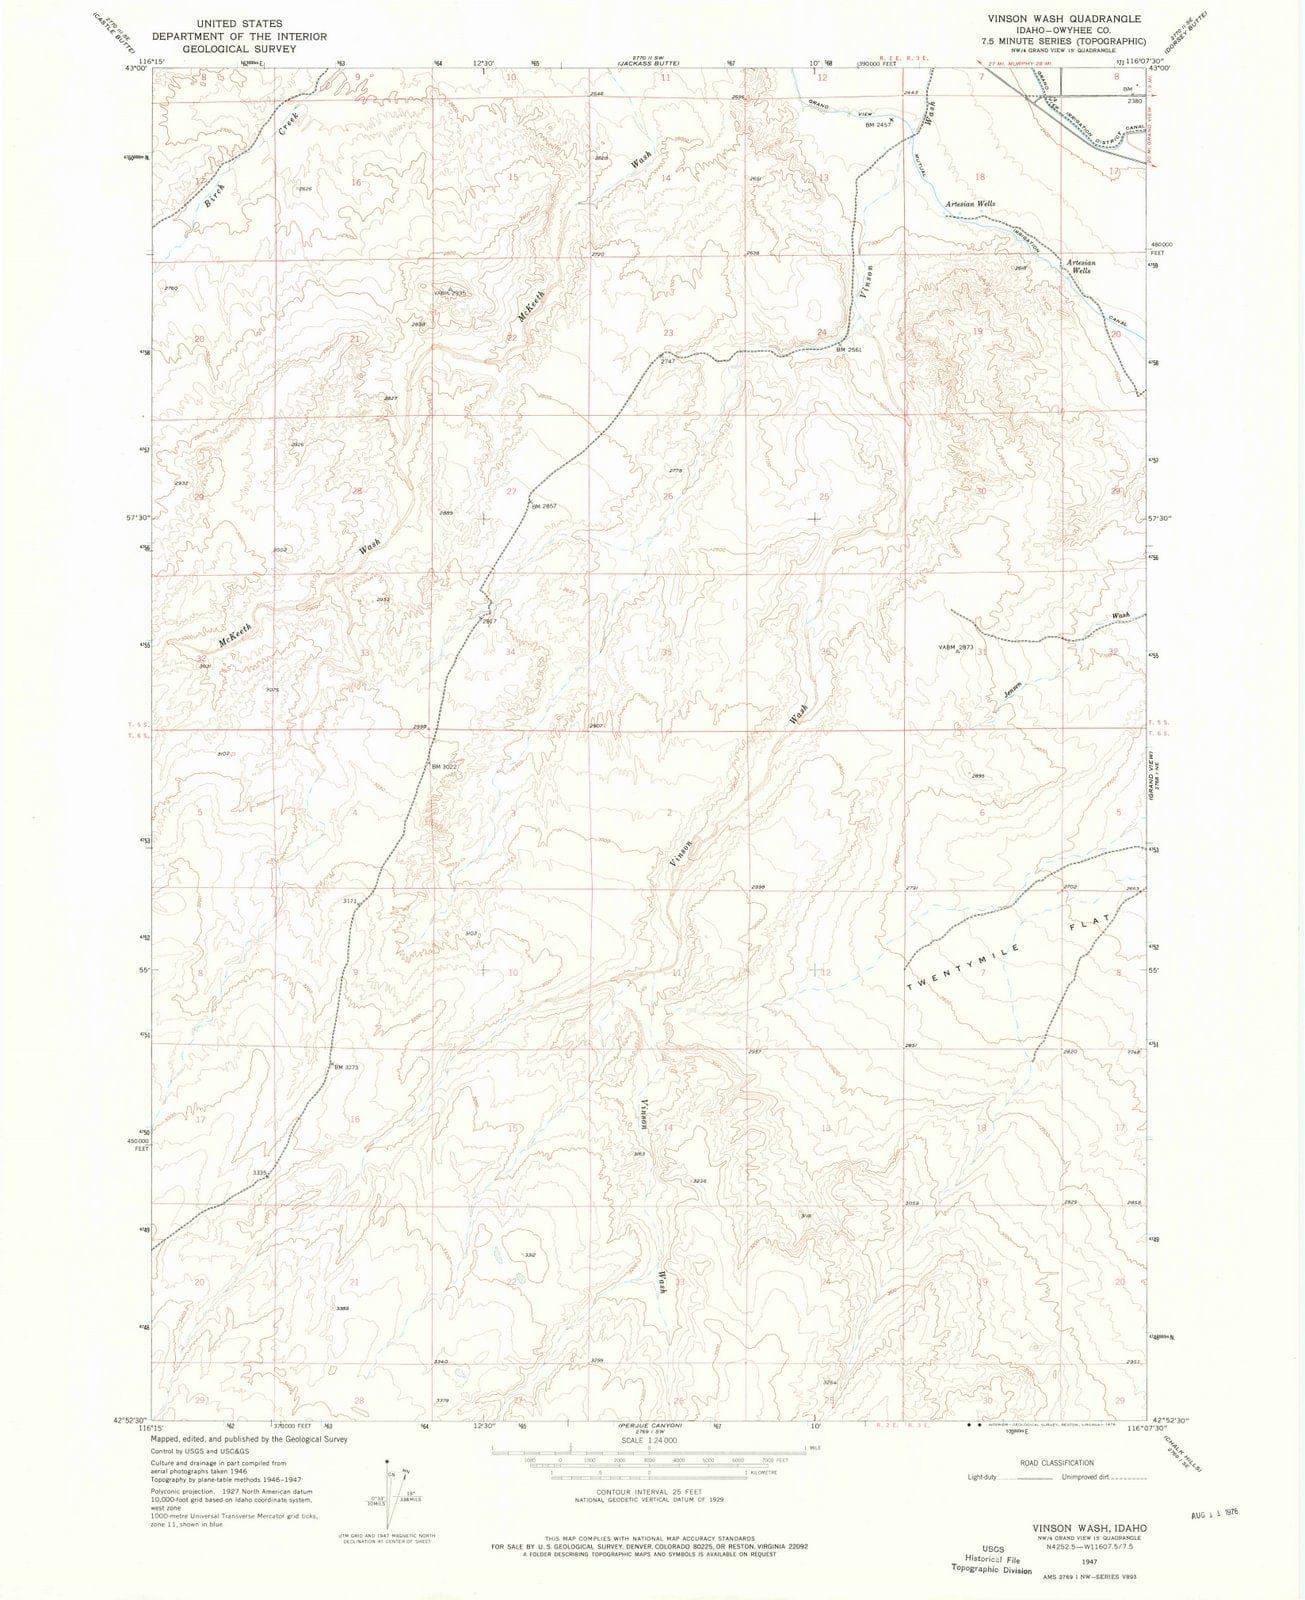 1947 Vinson Wash, ID - Idaho - USGS Topographic Map